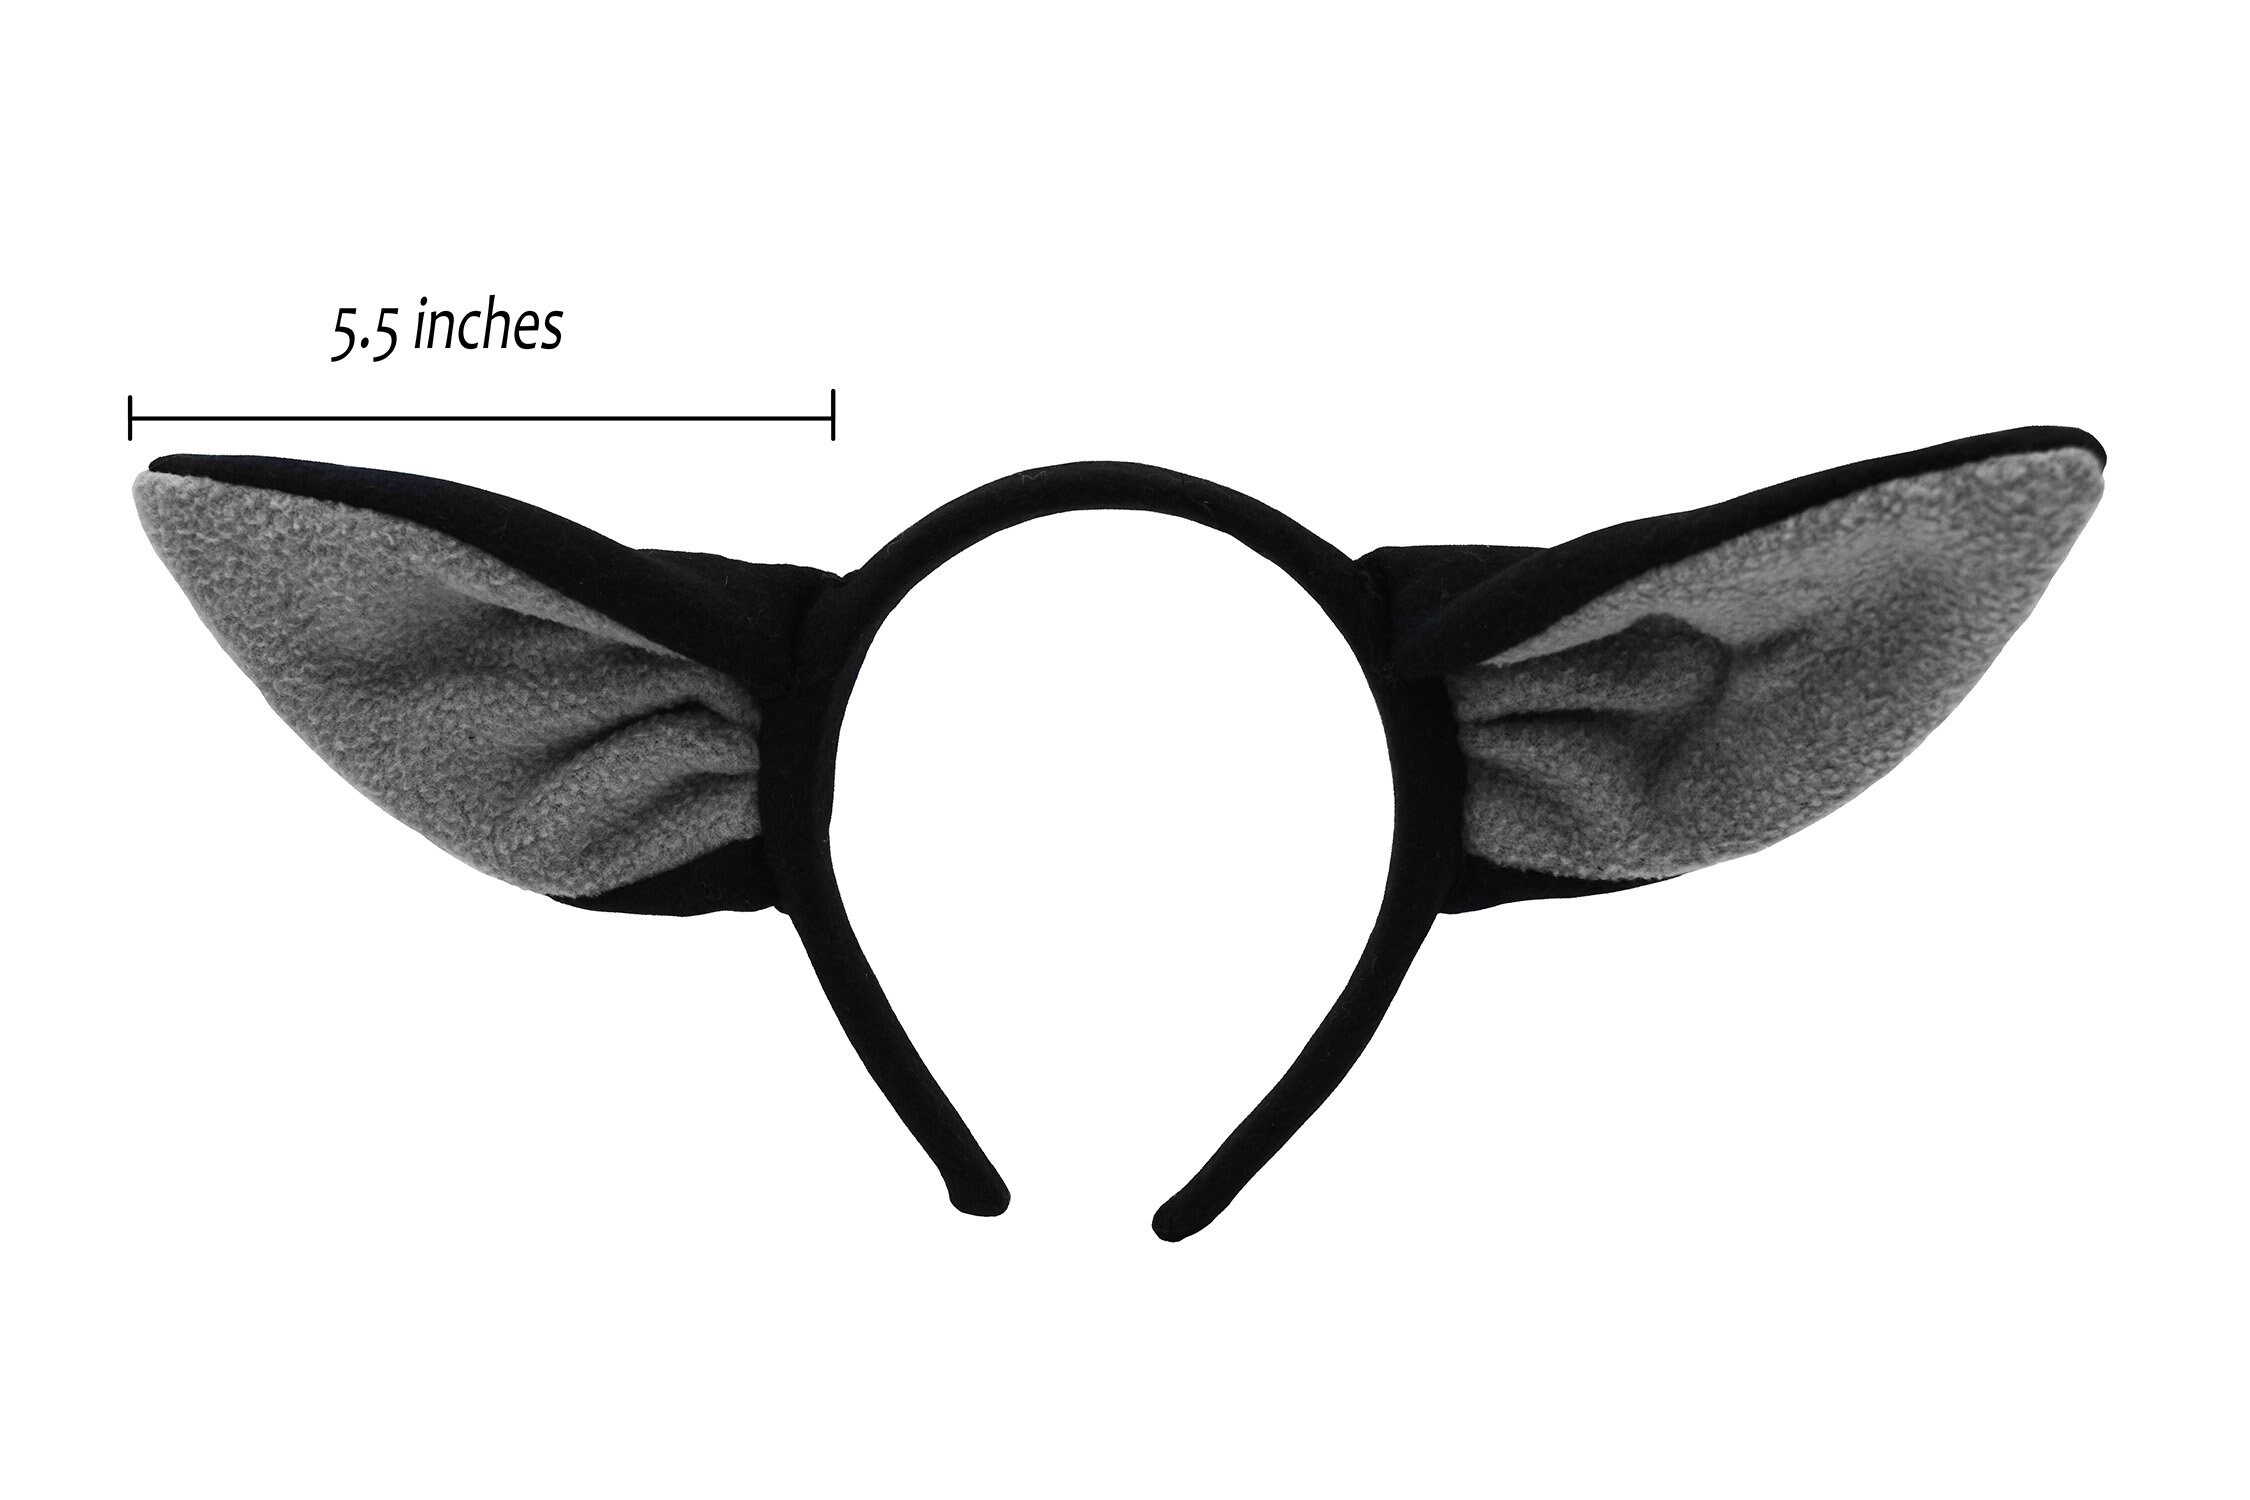 Cute Alien Ears Costume Plush Headband Hair Accessories Costume